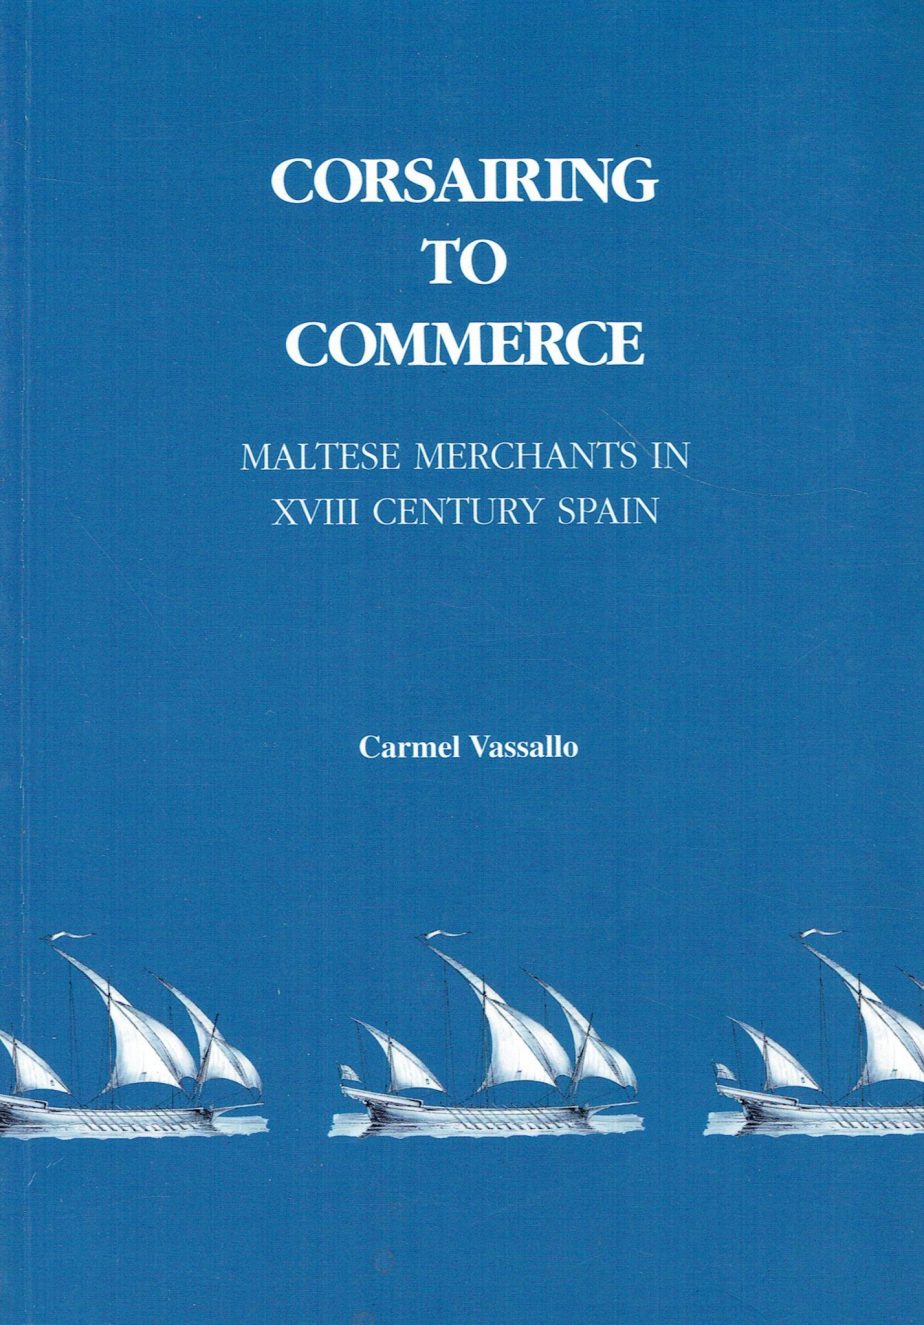 Corsairing to commerce : Maltese merchants in XVIII century Spain